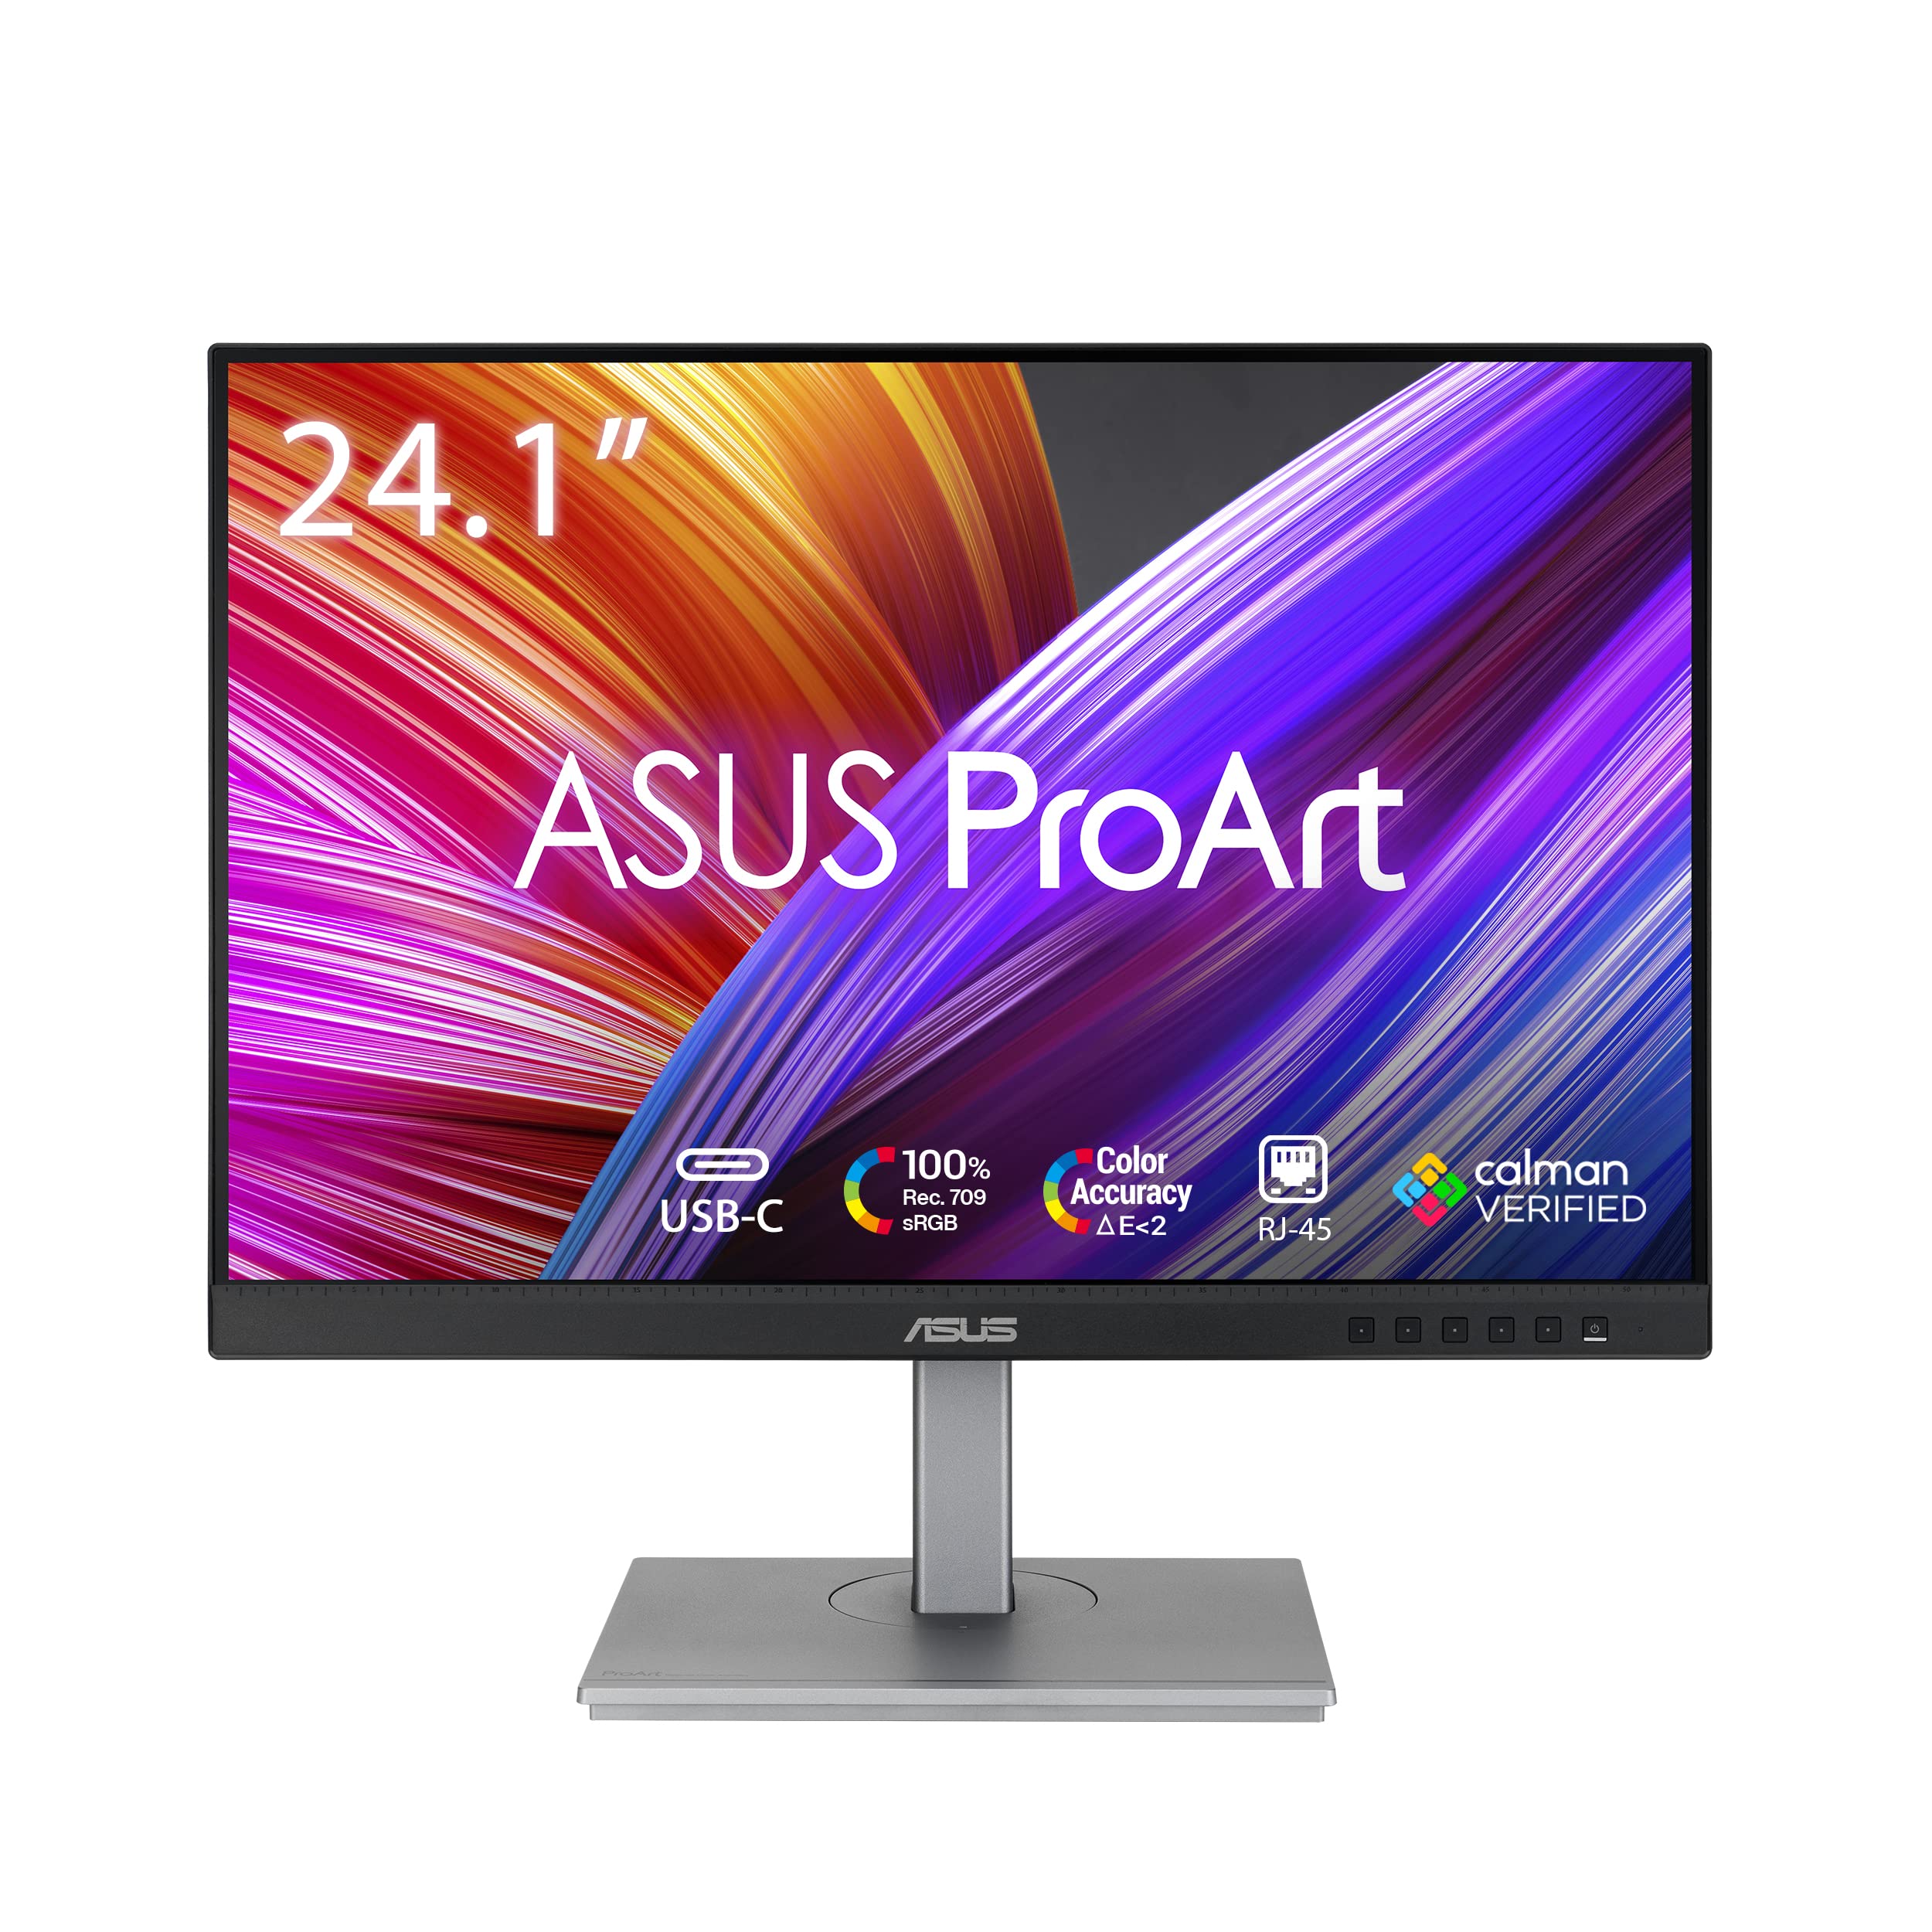 ASUS ProArt Display 24.1” 16:10 Professional Monitor (PA248CNV) - IPS, WUXGA (1920 x 1200), 100% sRGB/Rec.709, Color Accuracy ΔE2, Calman Verified, RJ45, USB-C, HDMI, Daisy Chain, DisplayPort, 75Hz